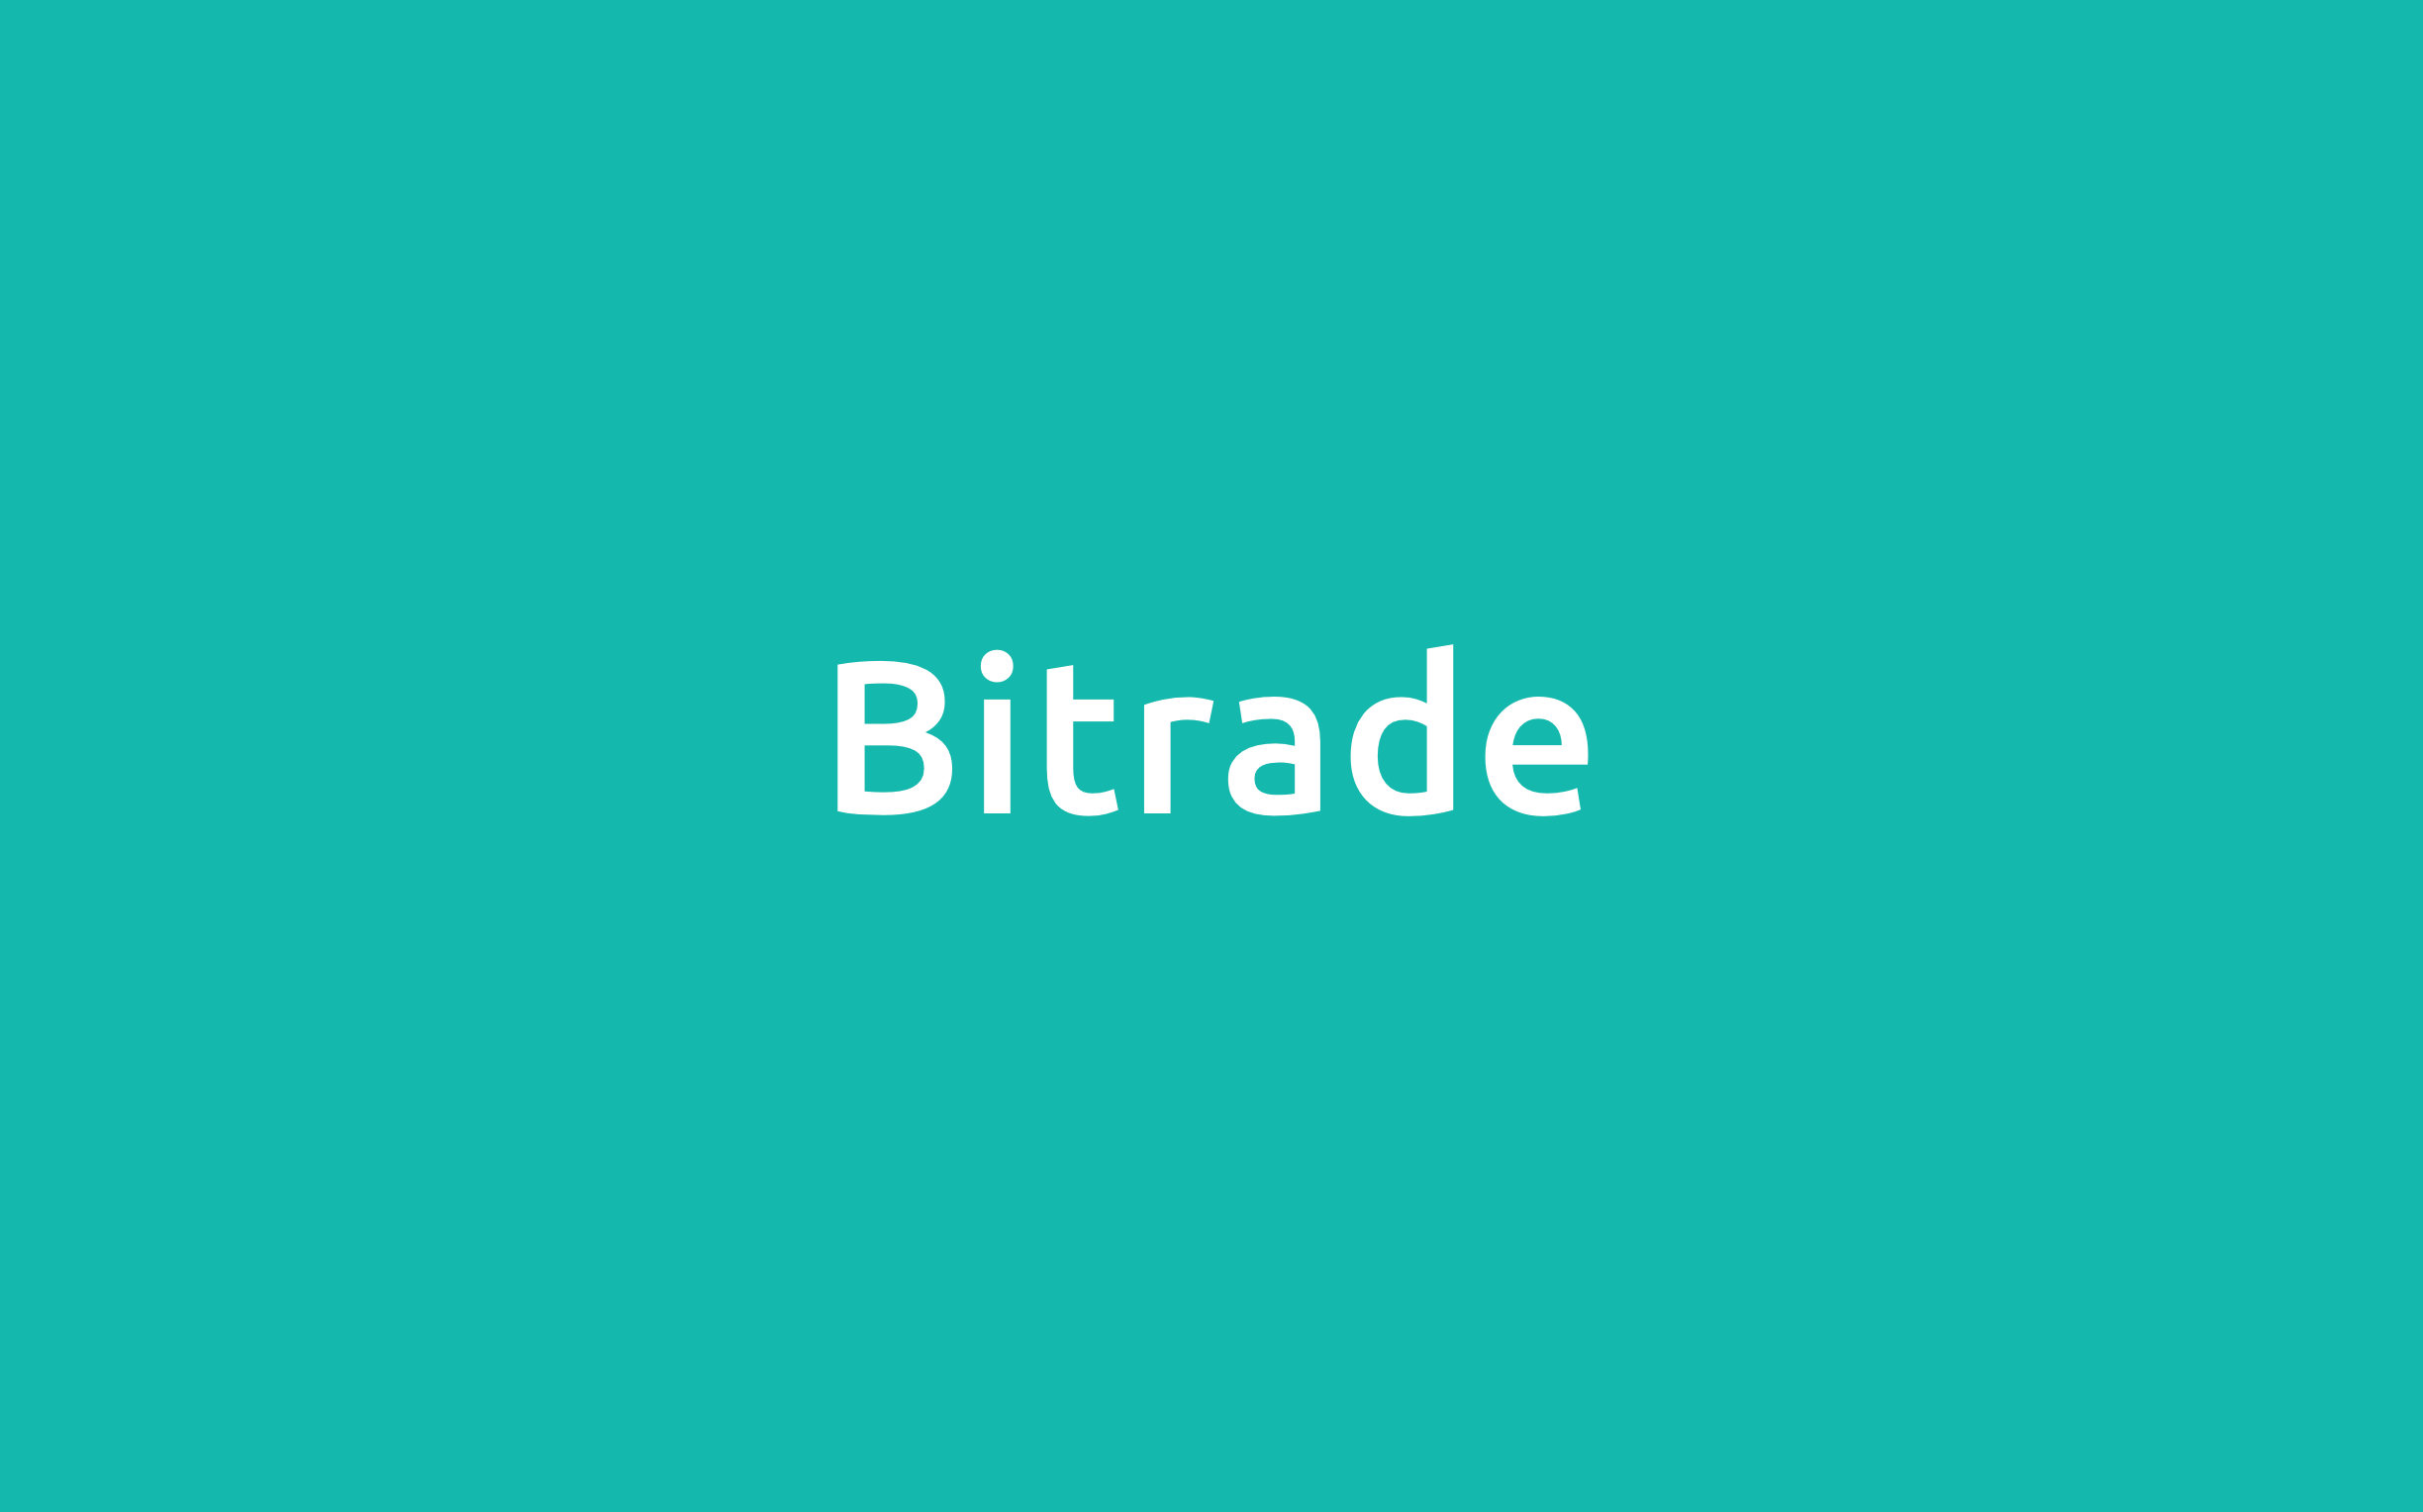 Bitrade Bitcoin Trading Ltd